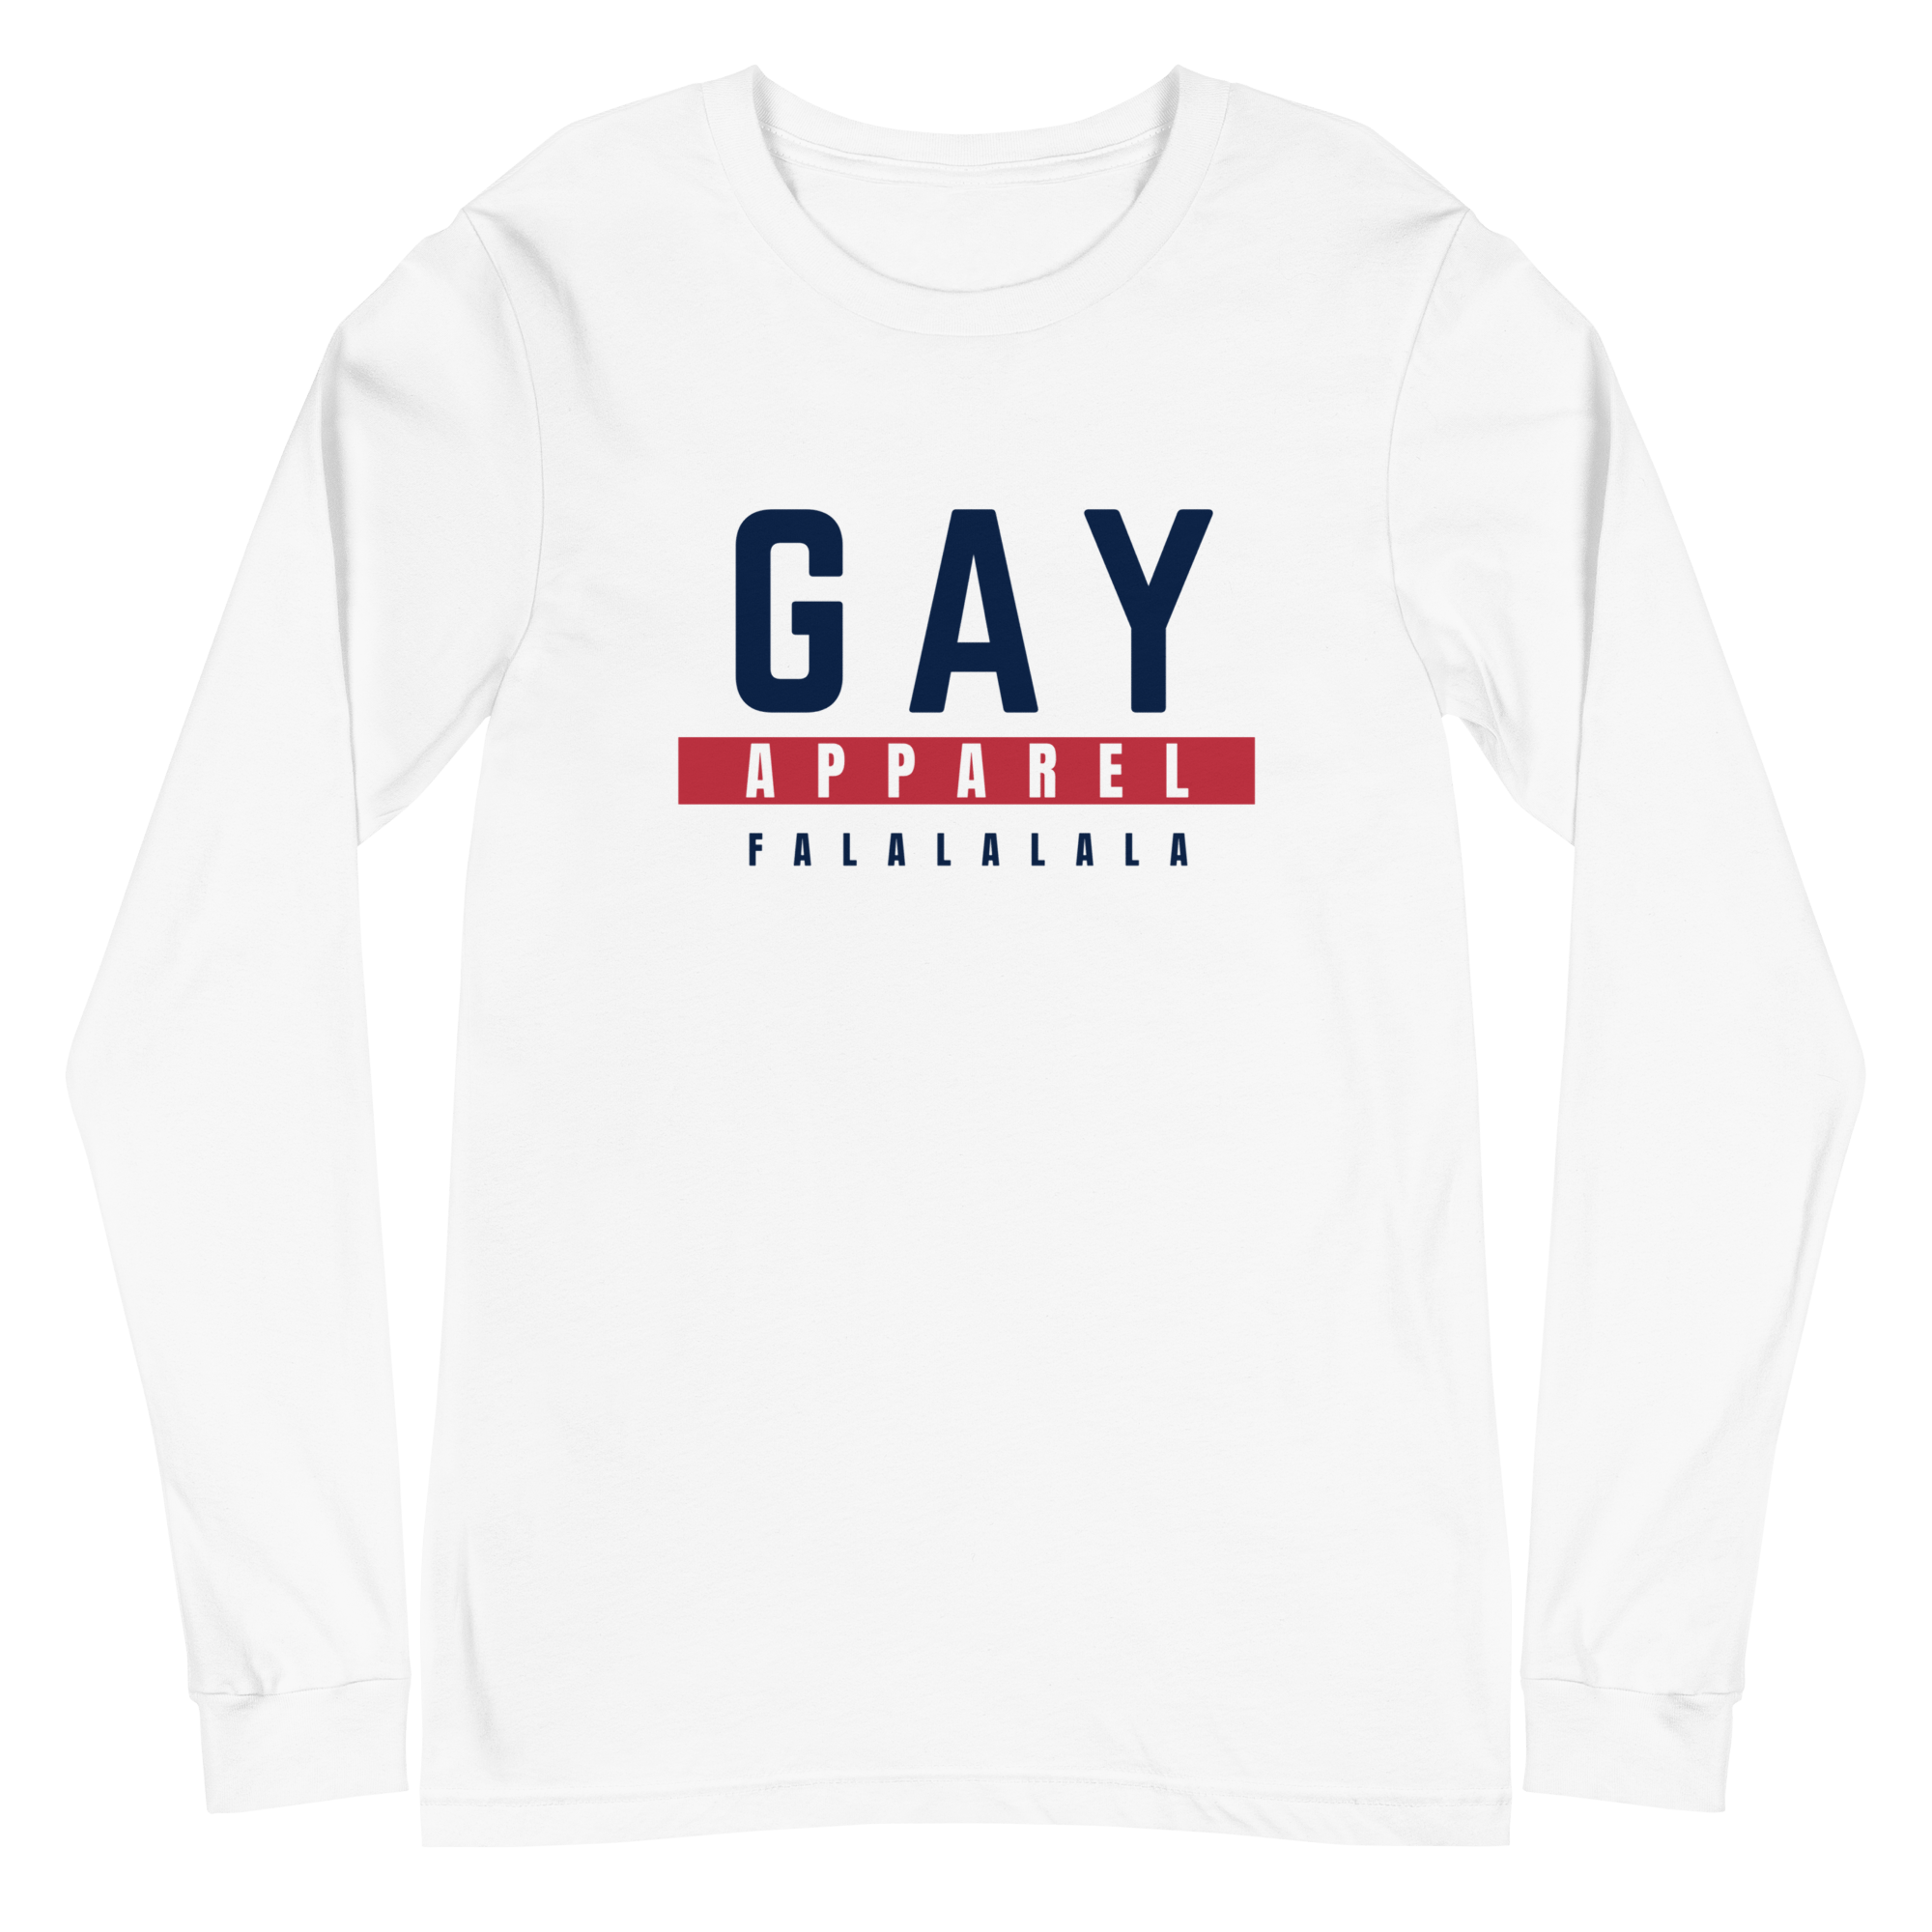 Gay Apparel Falalalala Long-Sleeve Shirt XS Jolly & Goode